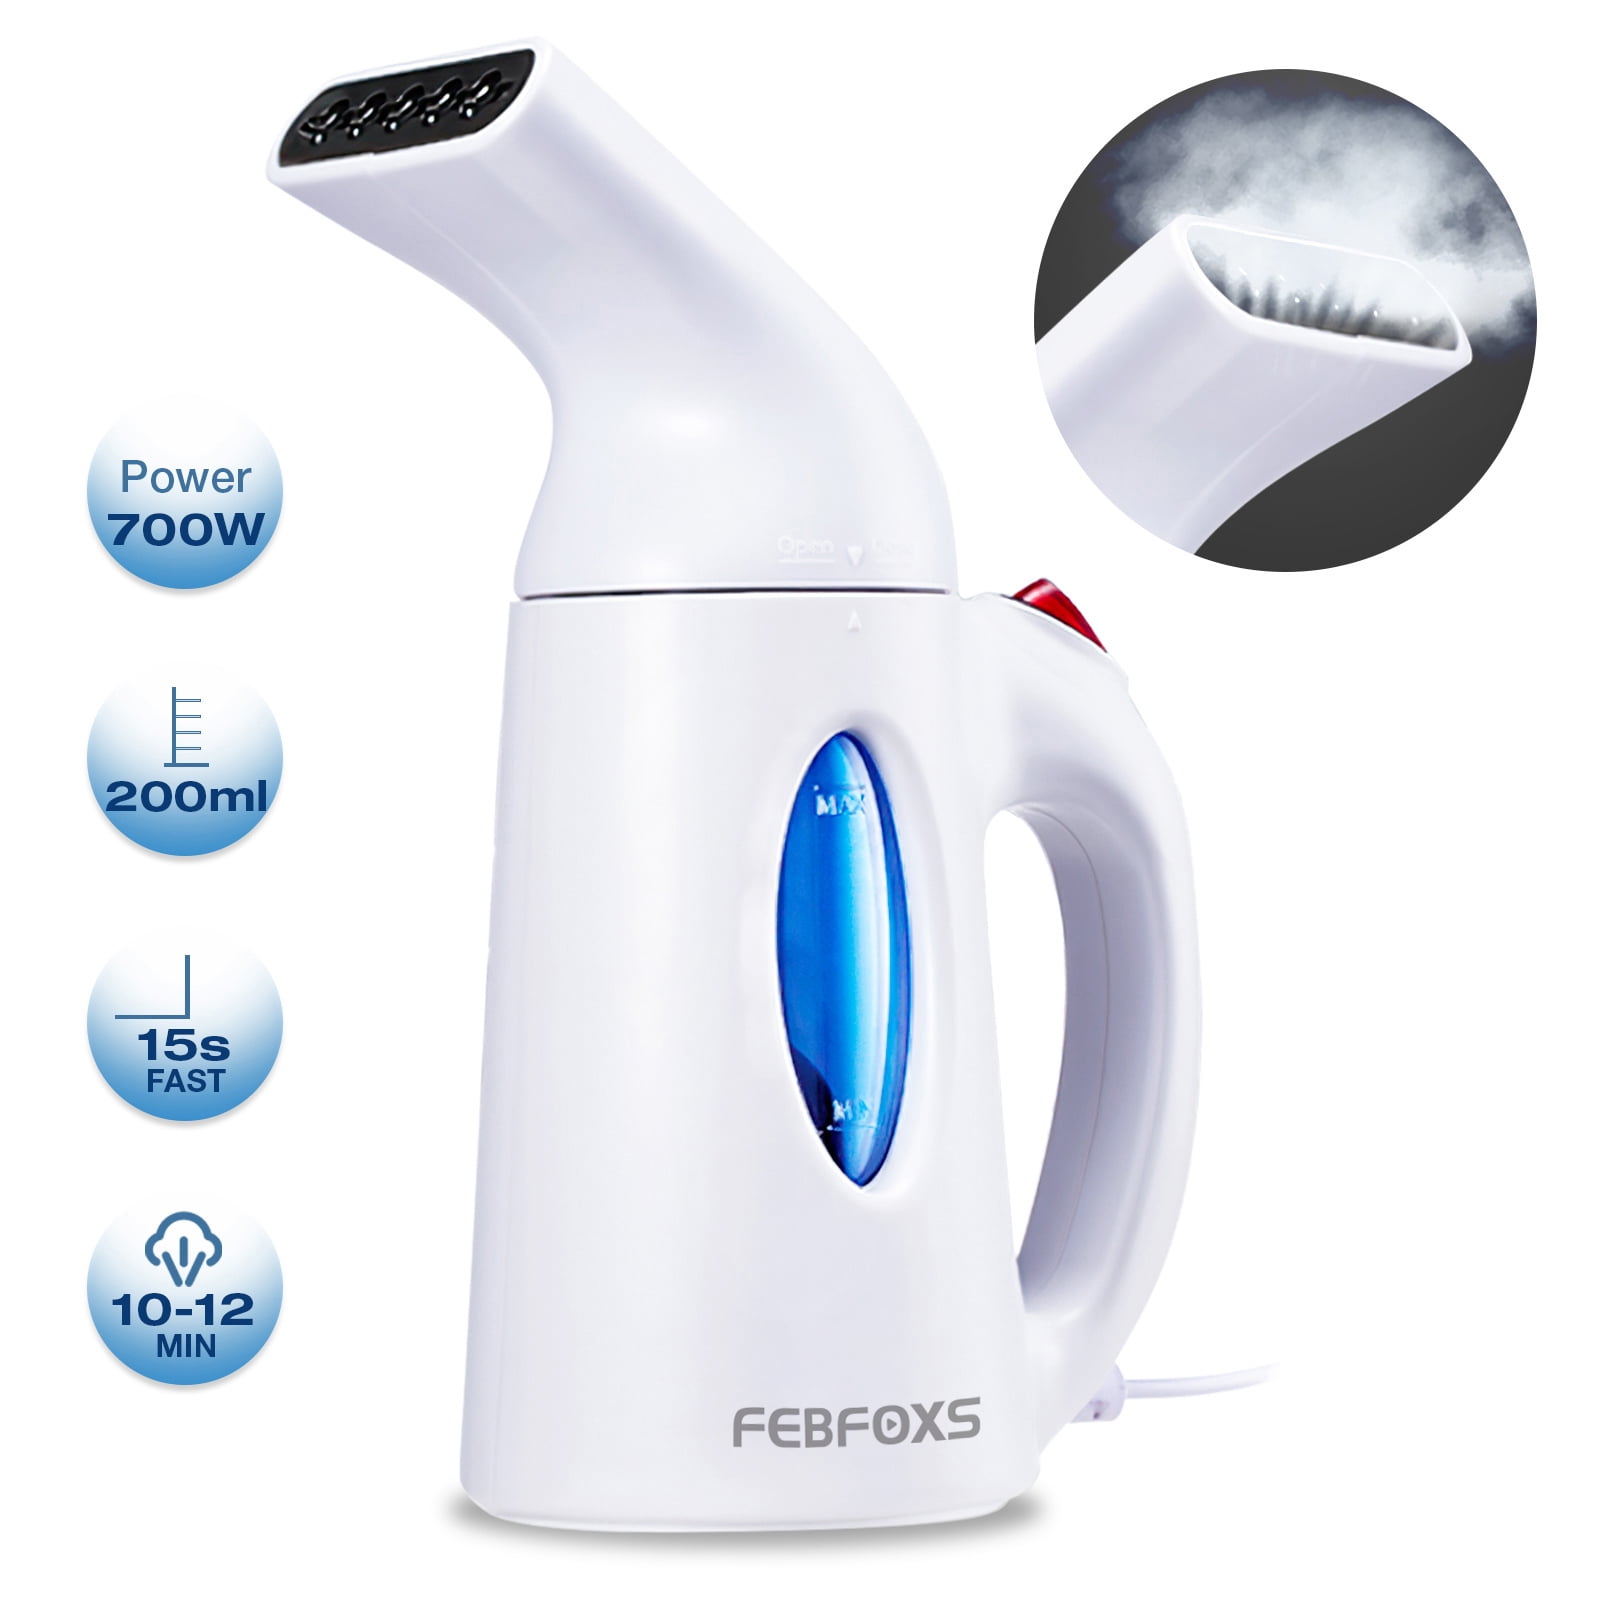 Febfoxs Steamer for Clothes,700w Portable Garment Steamer,Auto Shut-Off Function,Wrinkles/Steam/Soften/Clean/Sterilize,White, Women's, Size: Small